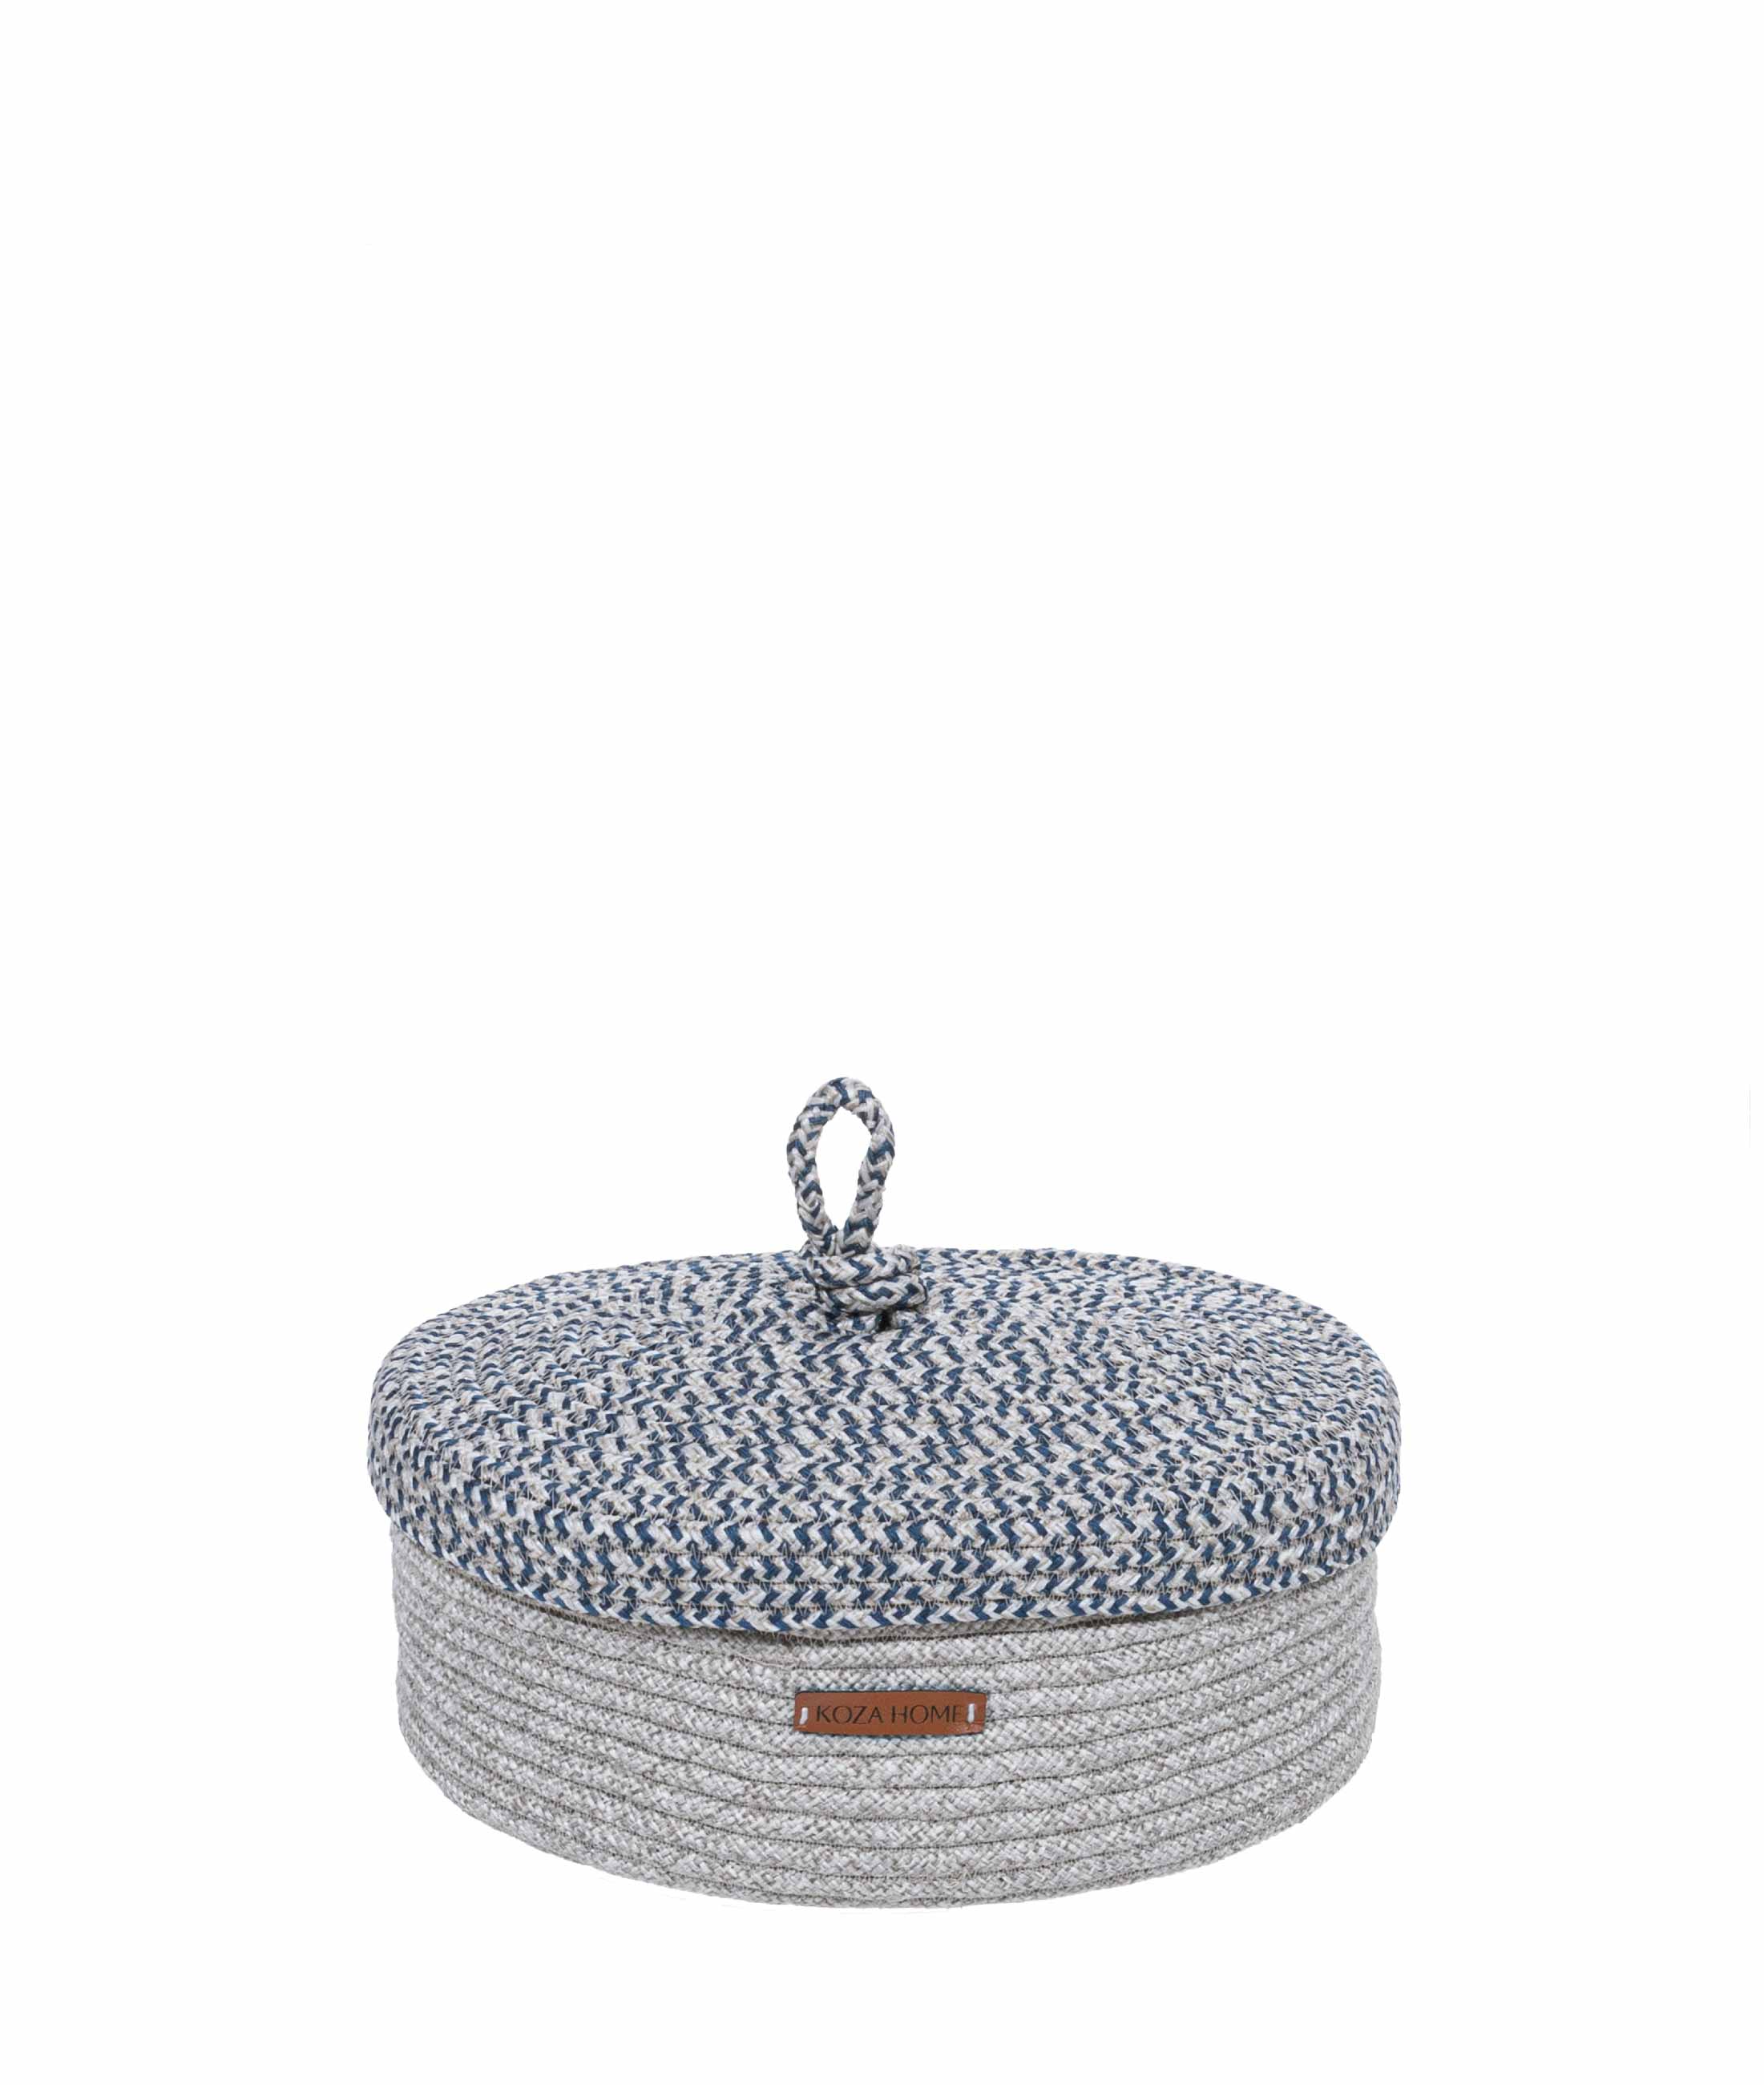 Cesta Lid Handmade Cotton Gray Navy Wicker Decorative Basket 25cmx34cm